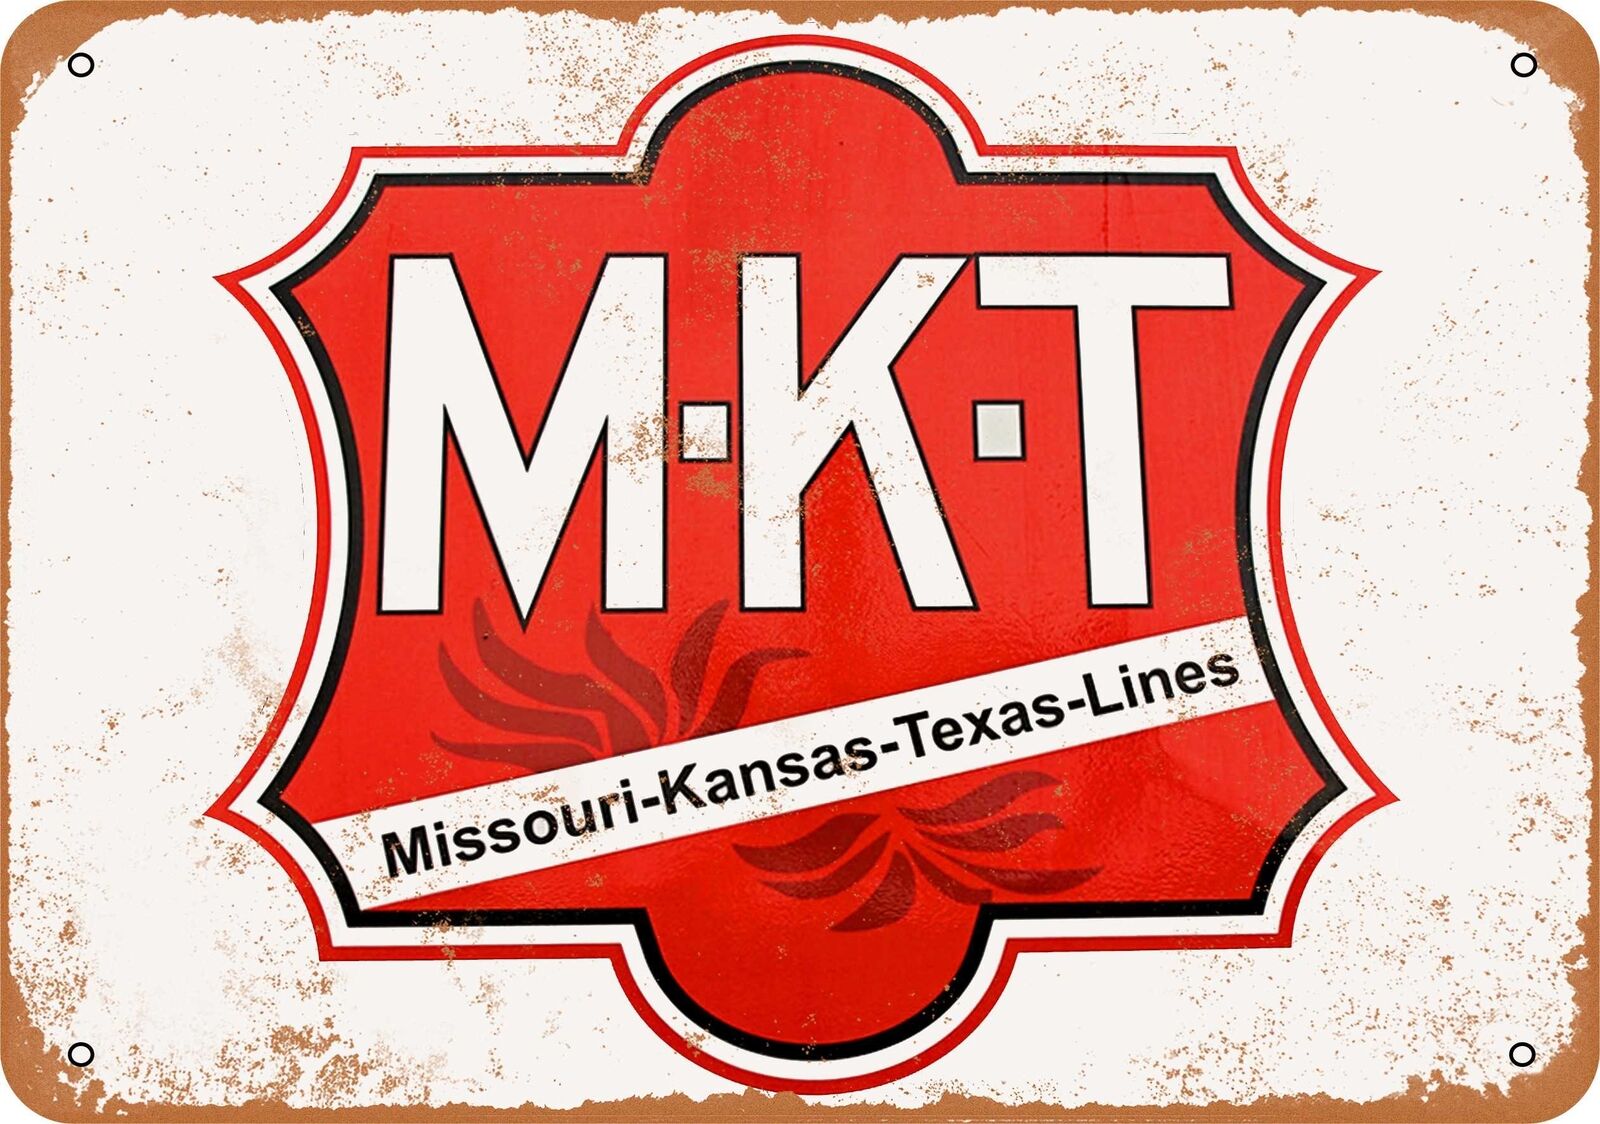 Metal Sign - Katy M-K-T Railroad - Vintage Look Reproduction